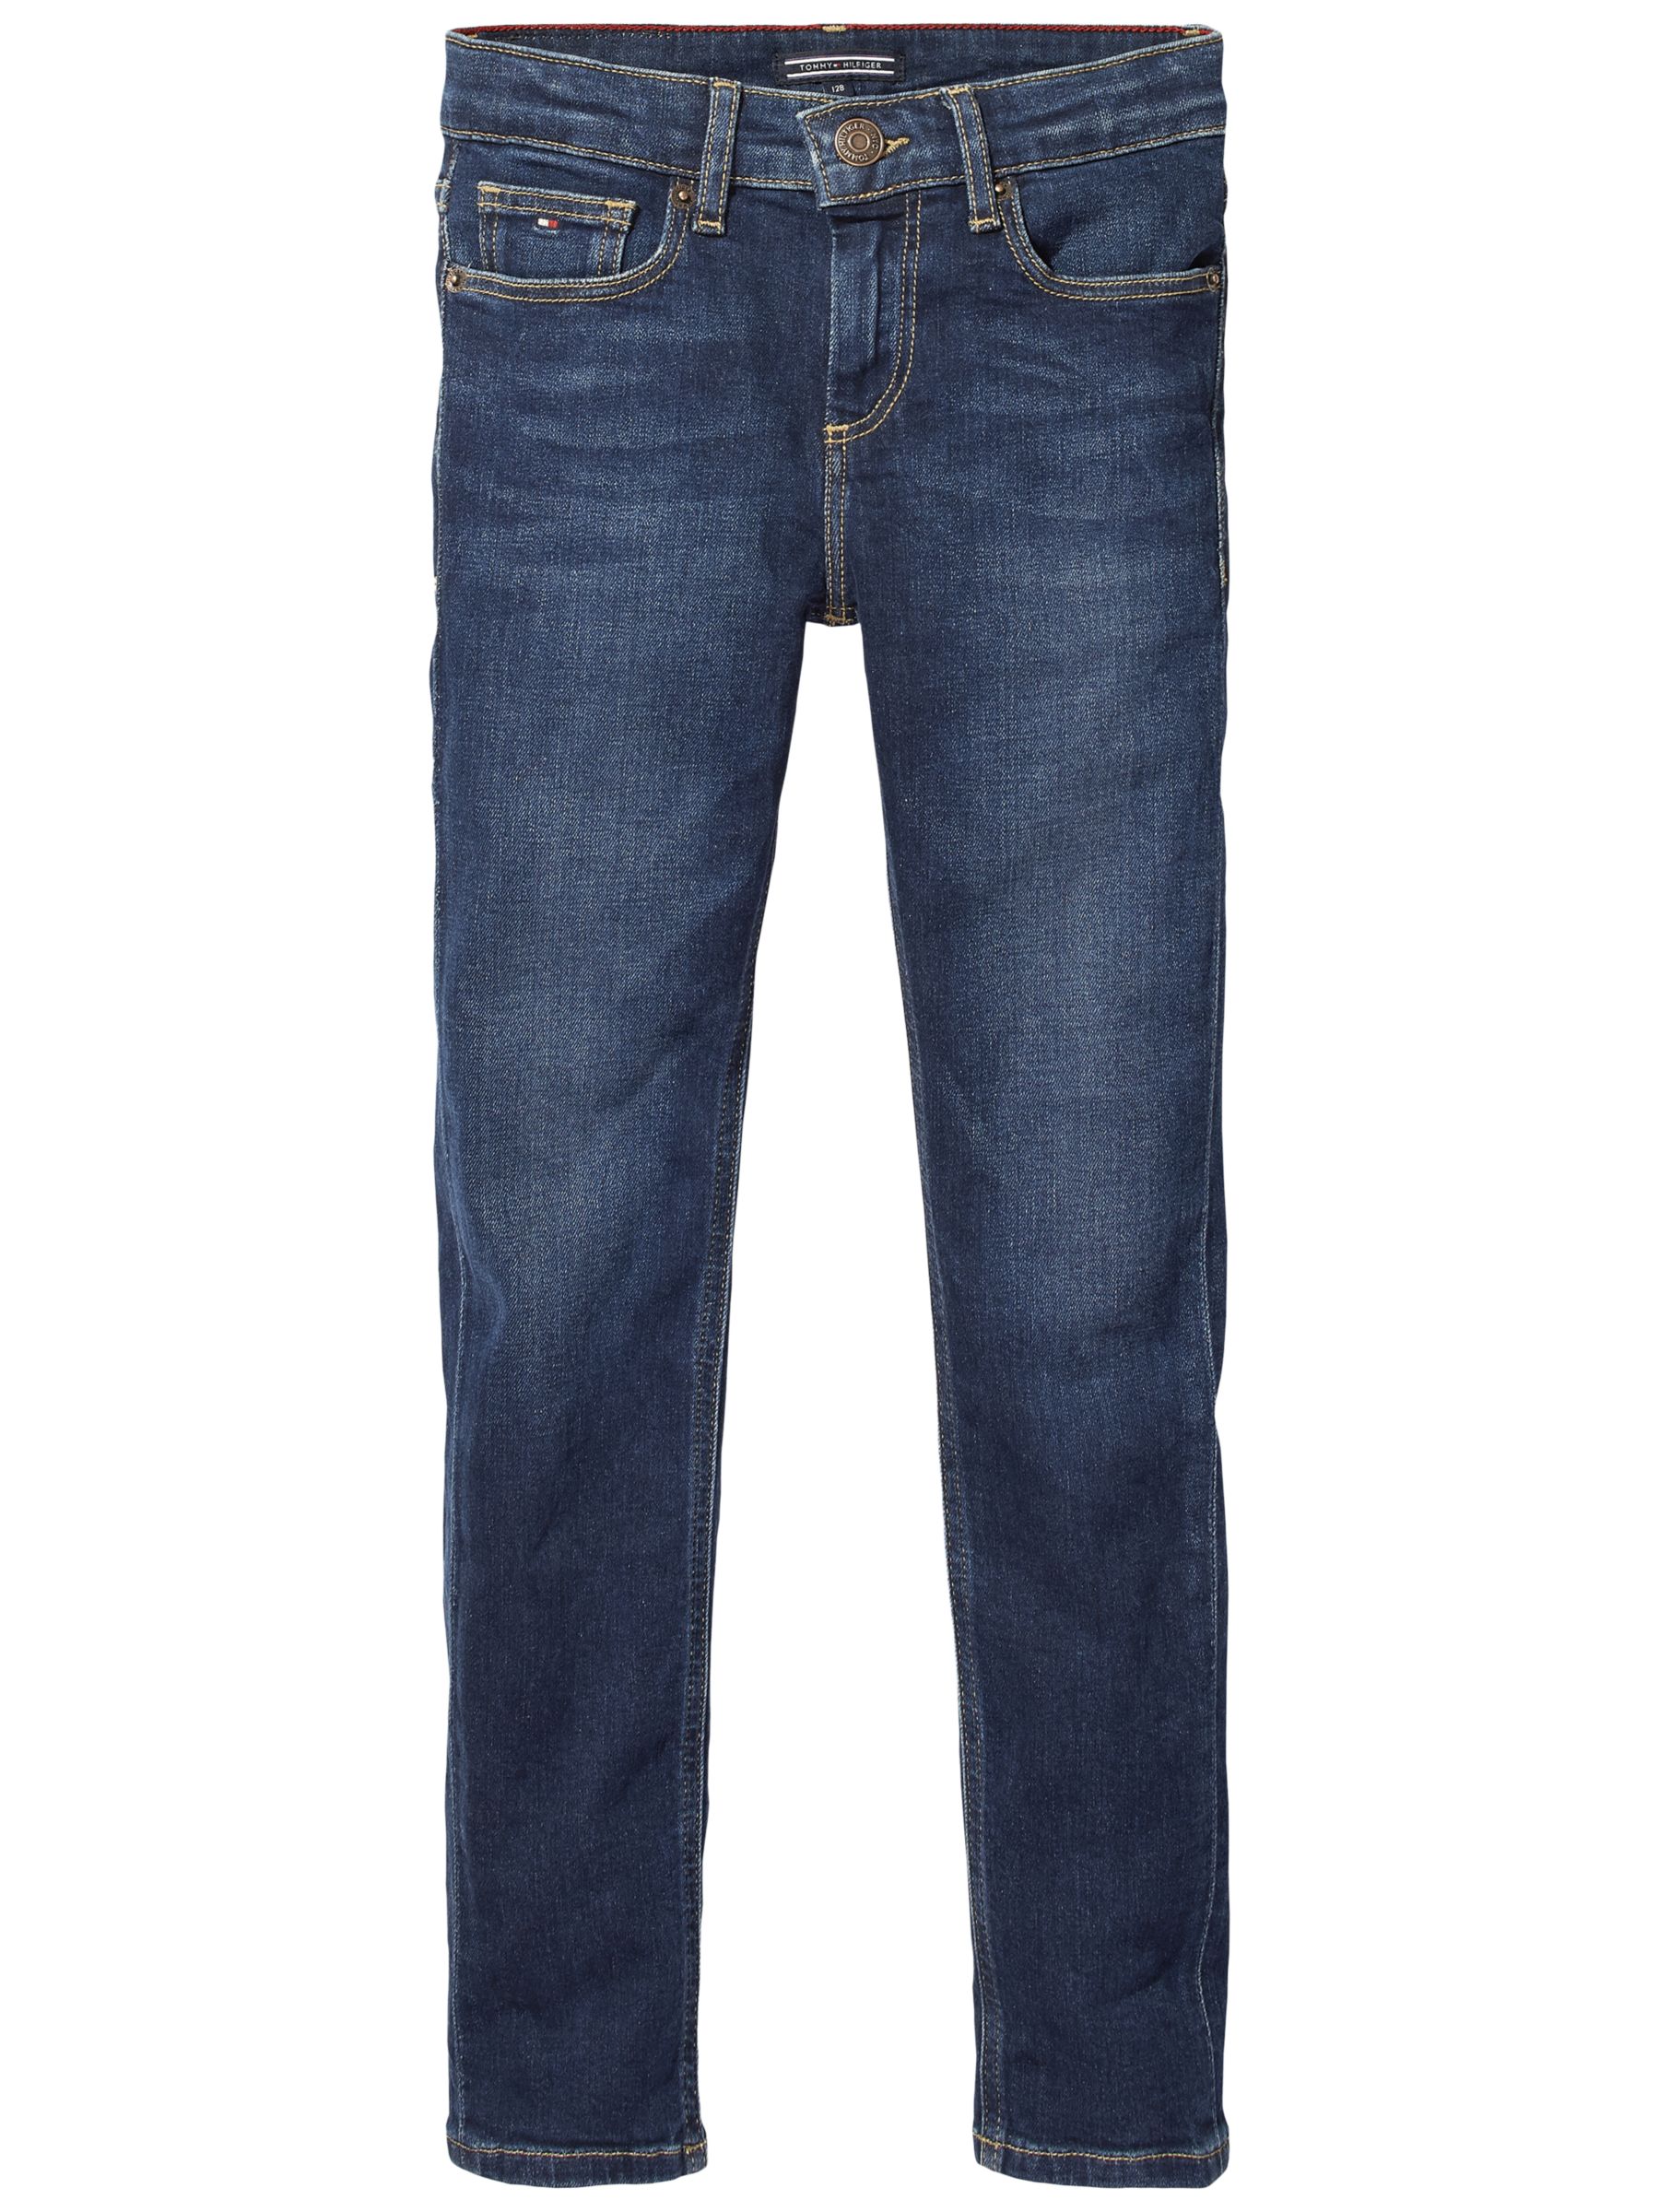 tommy hilfiger boy jeans Online 